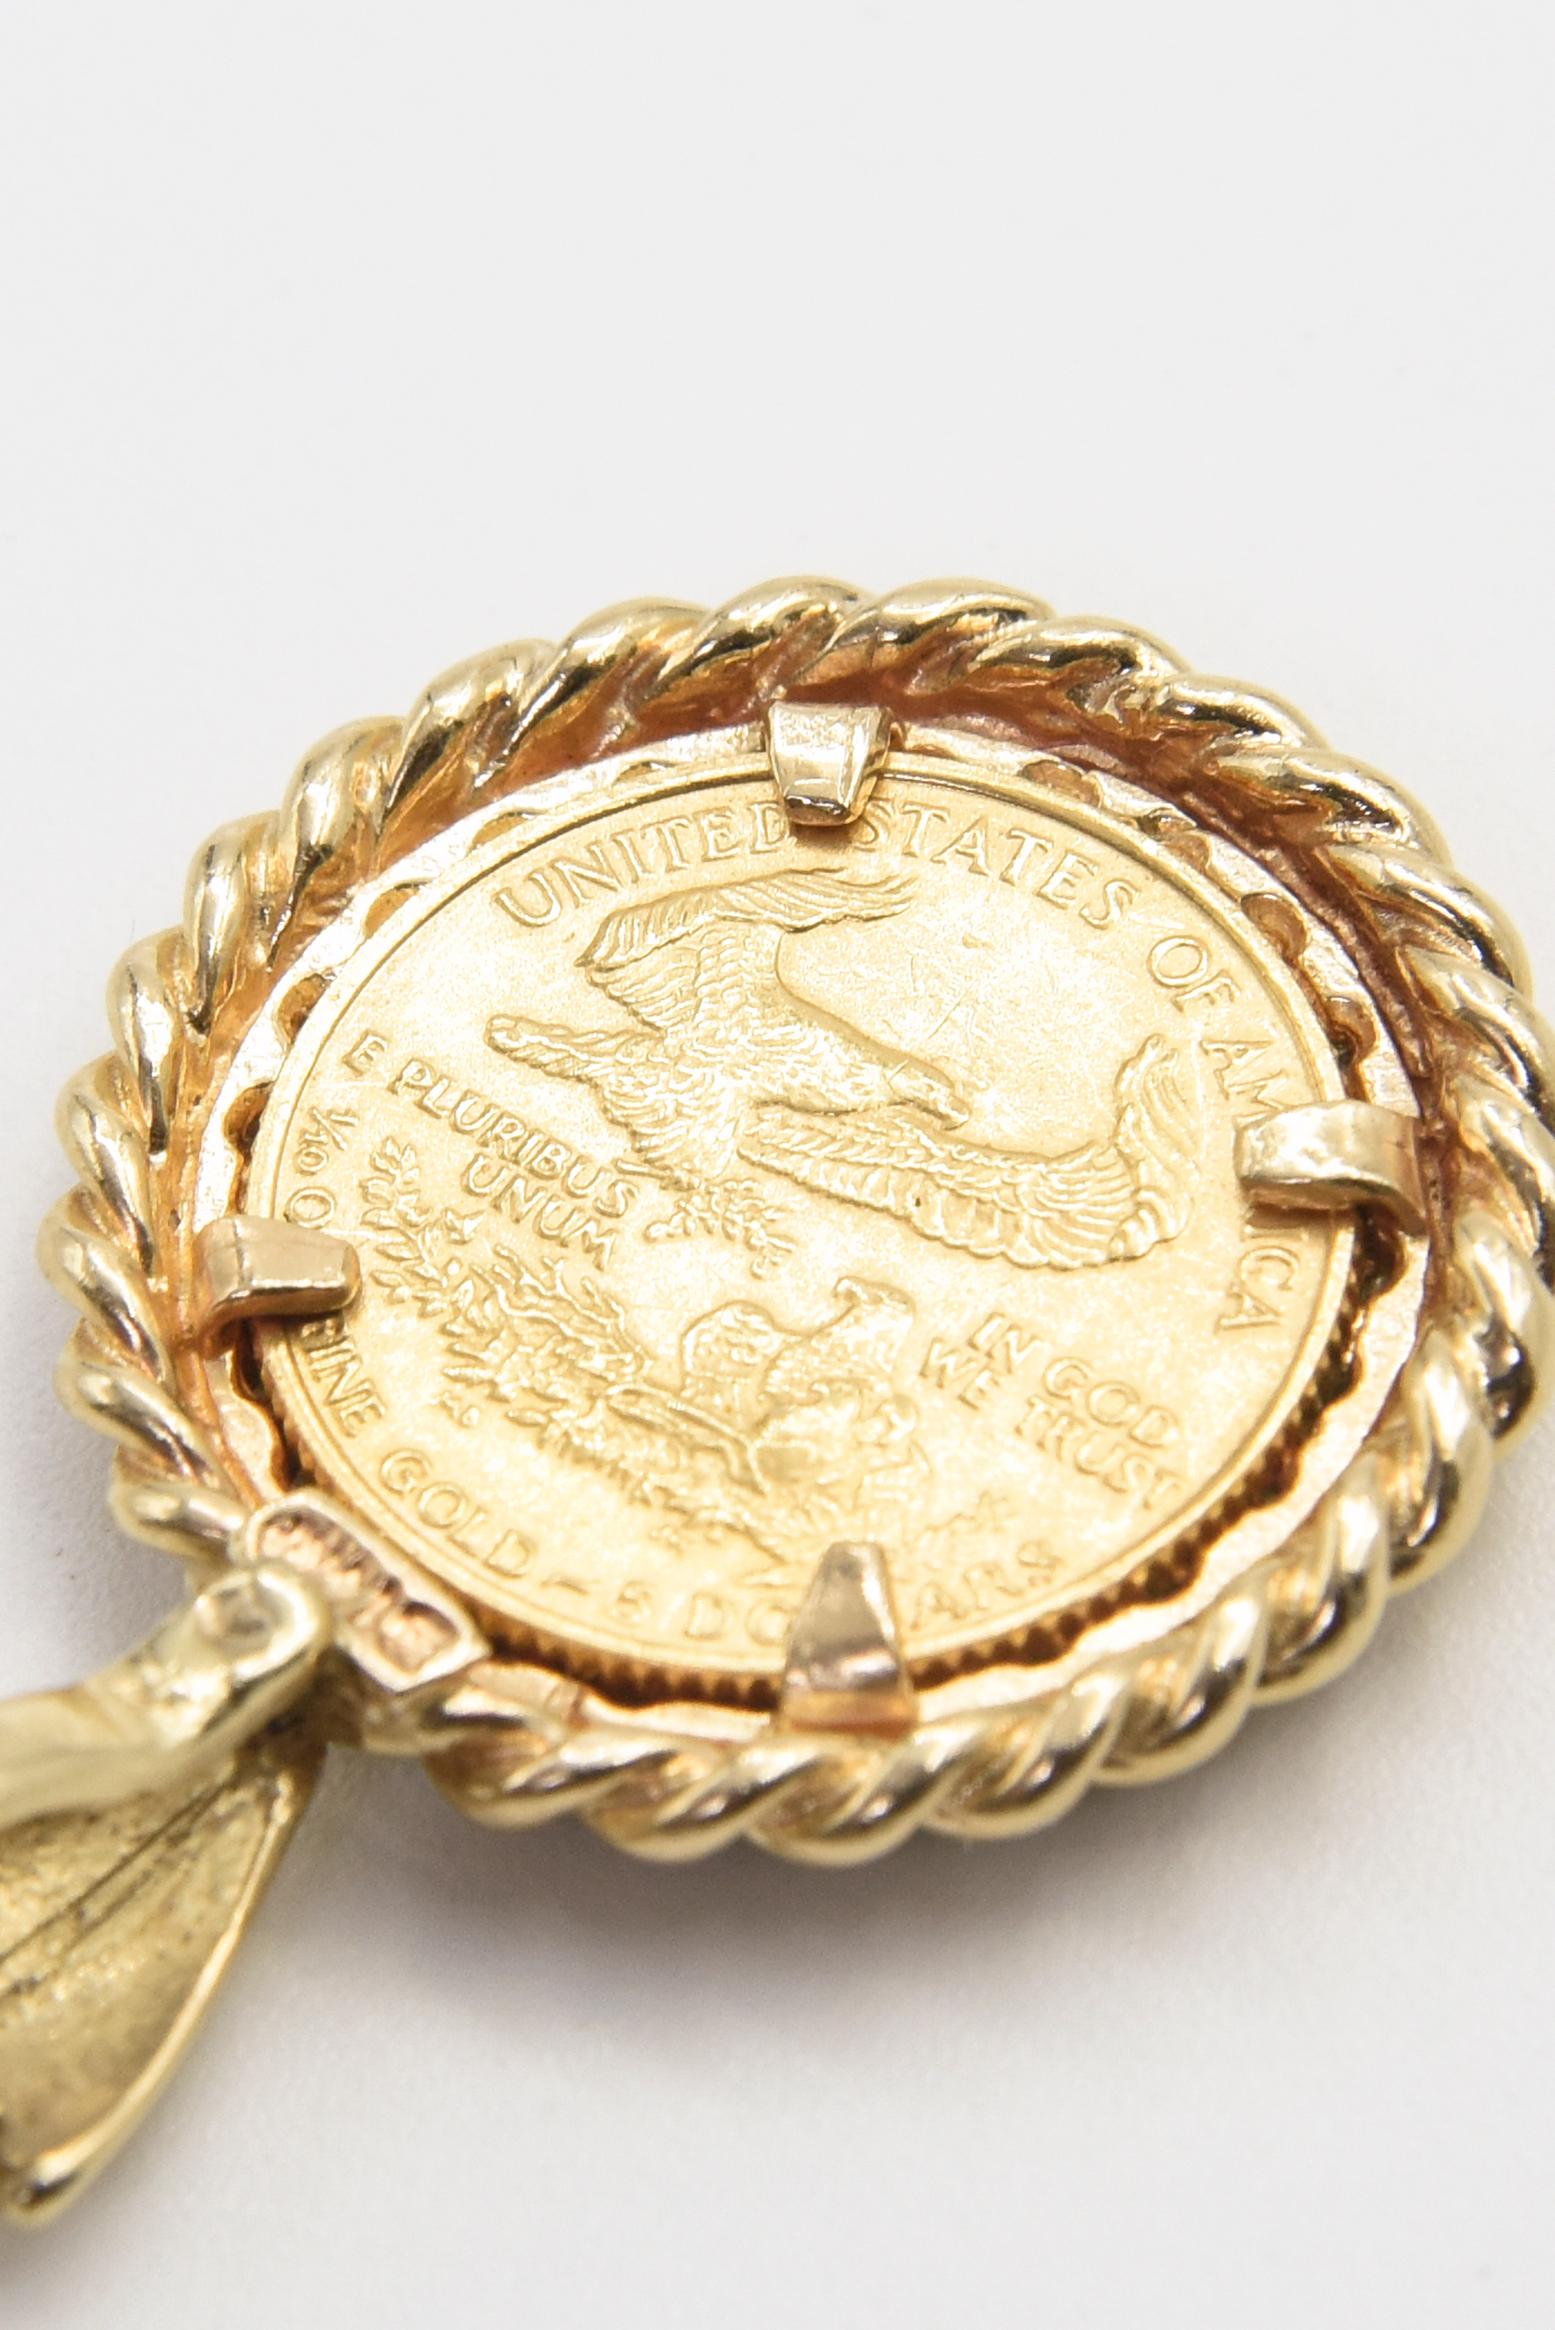 US Liberty Coin Diamond Necklace Gold Pendant Charm 1